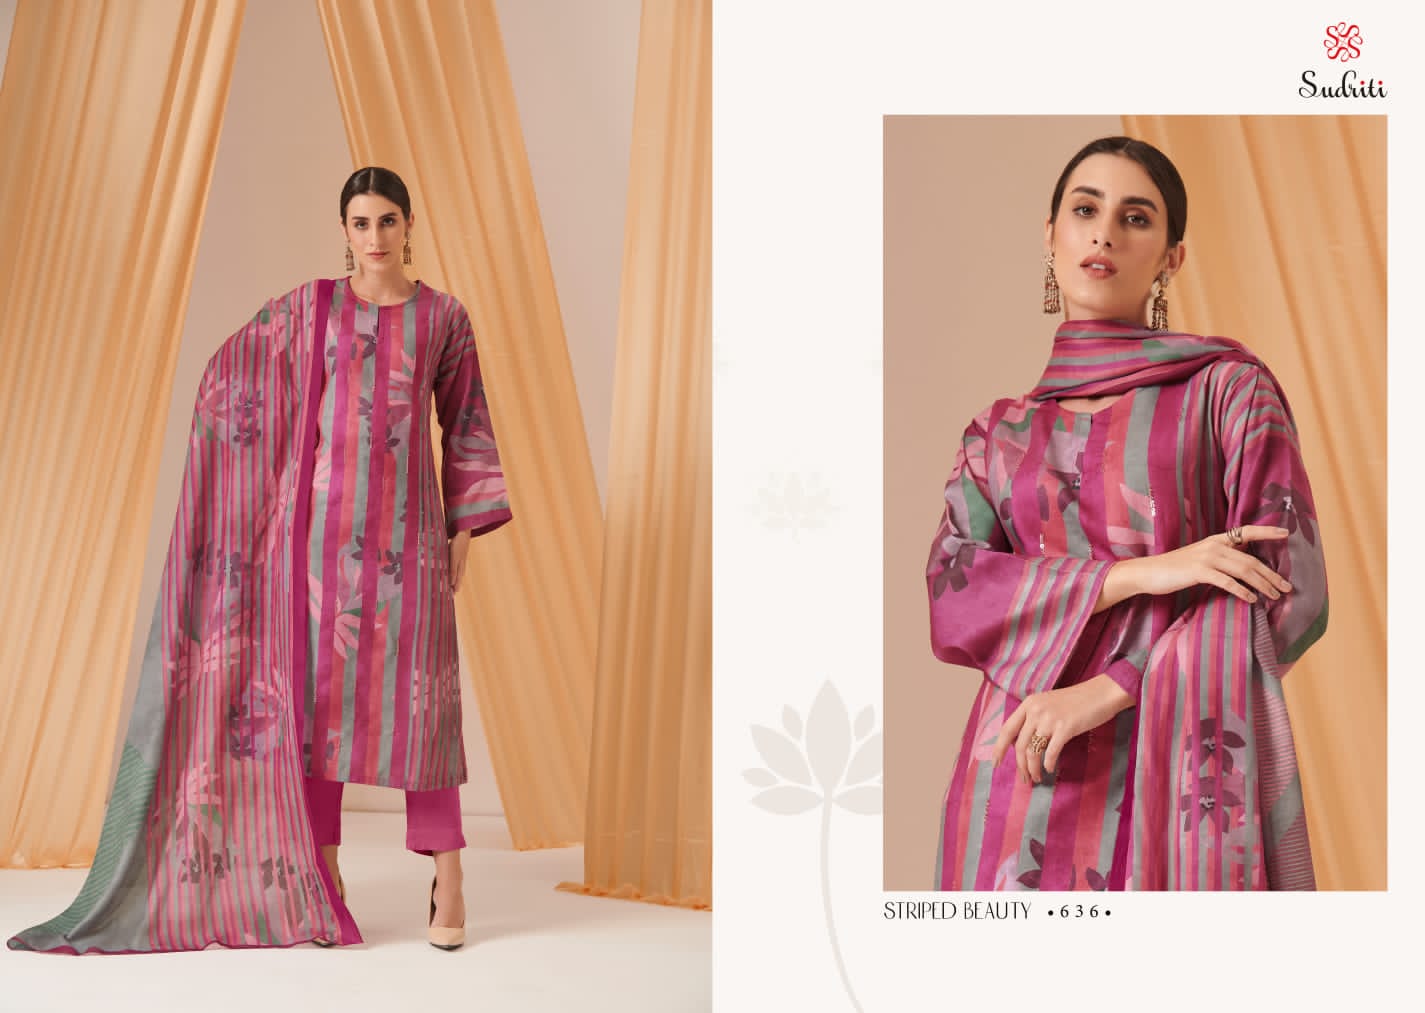 Striped Beauty Sudriti Sahiba Pashmina Suits